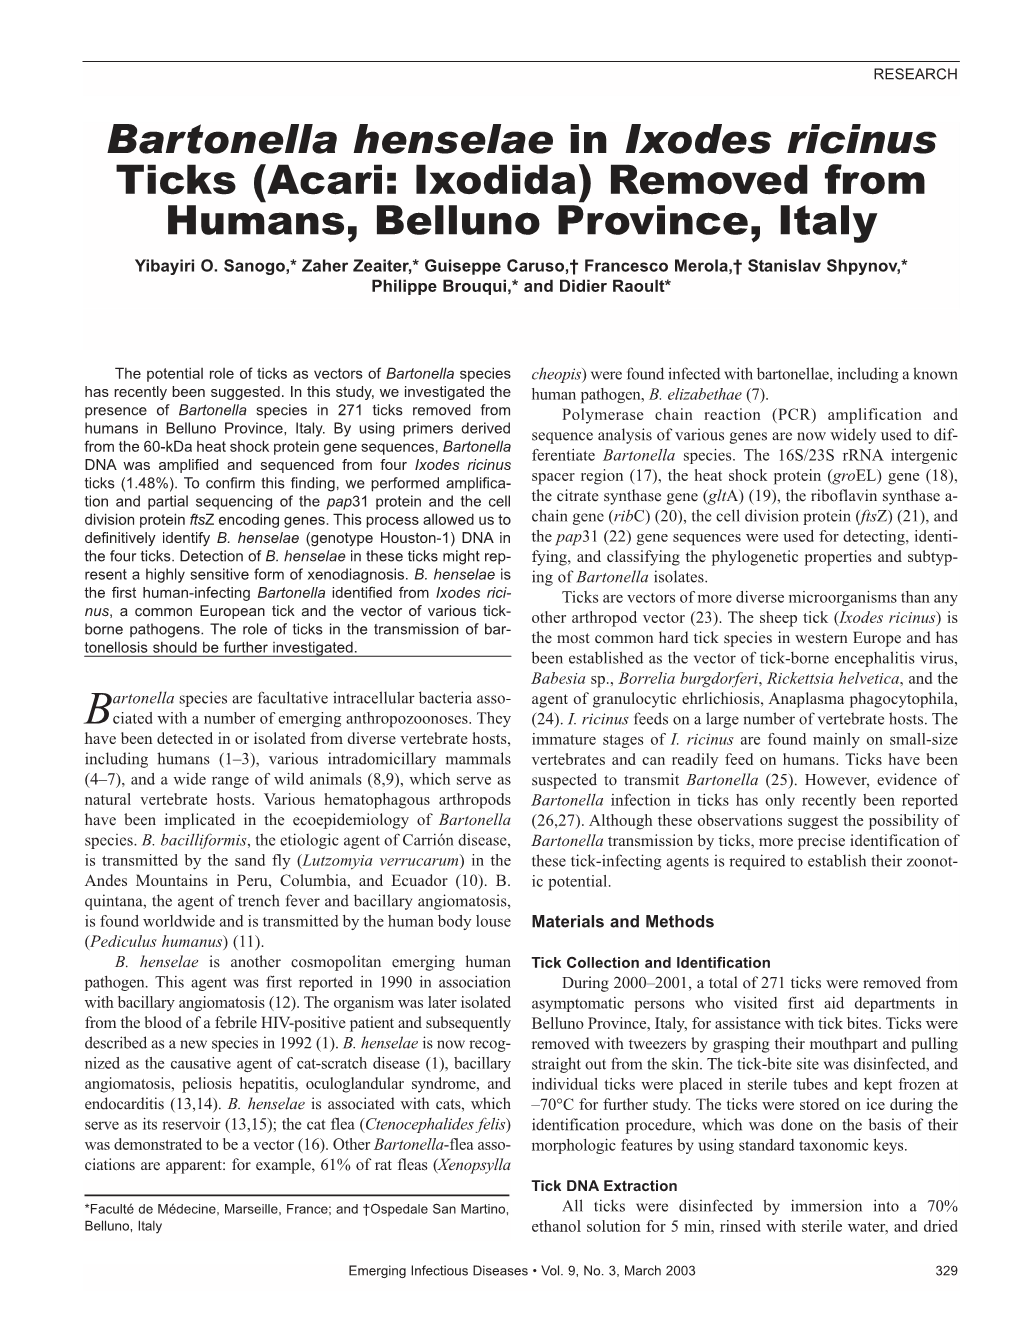 Bartonella Henselae in Ixodes Ricinus Ticks (Acari: Ixodida) Removed from Humans, Belluno Province, Italy Yibayiri O